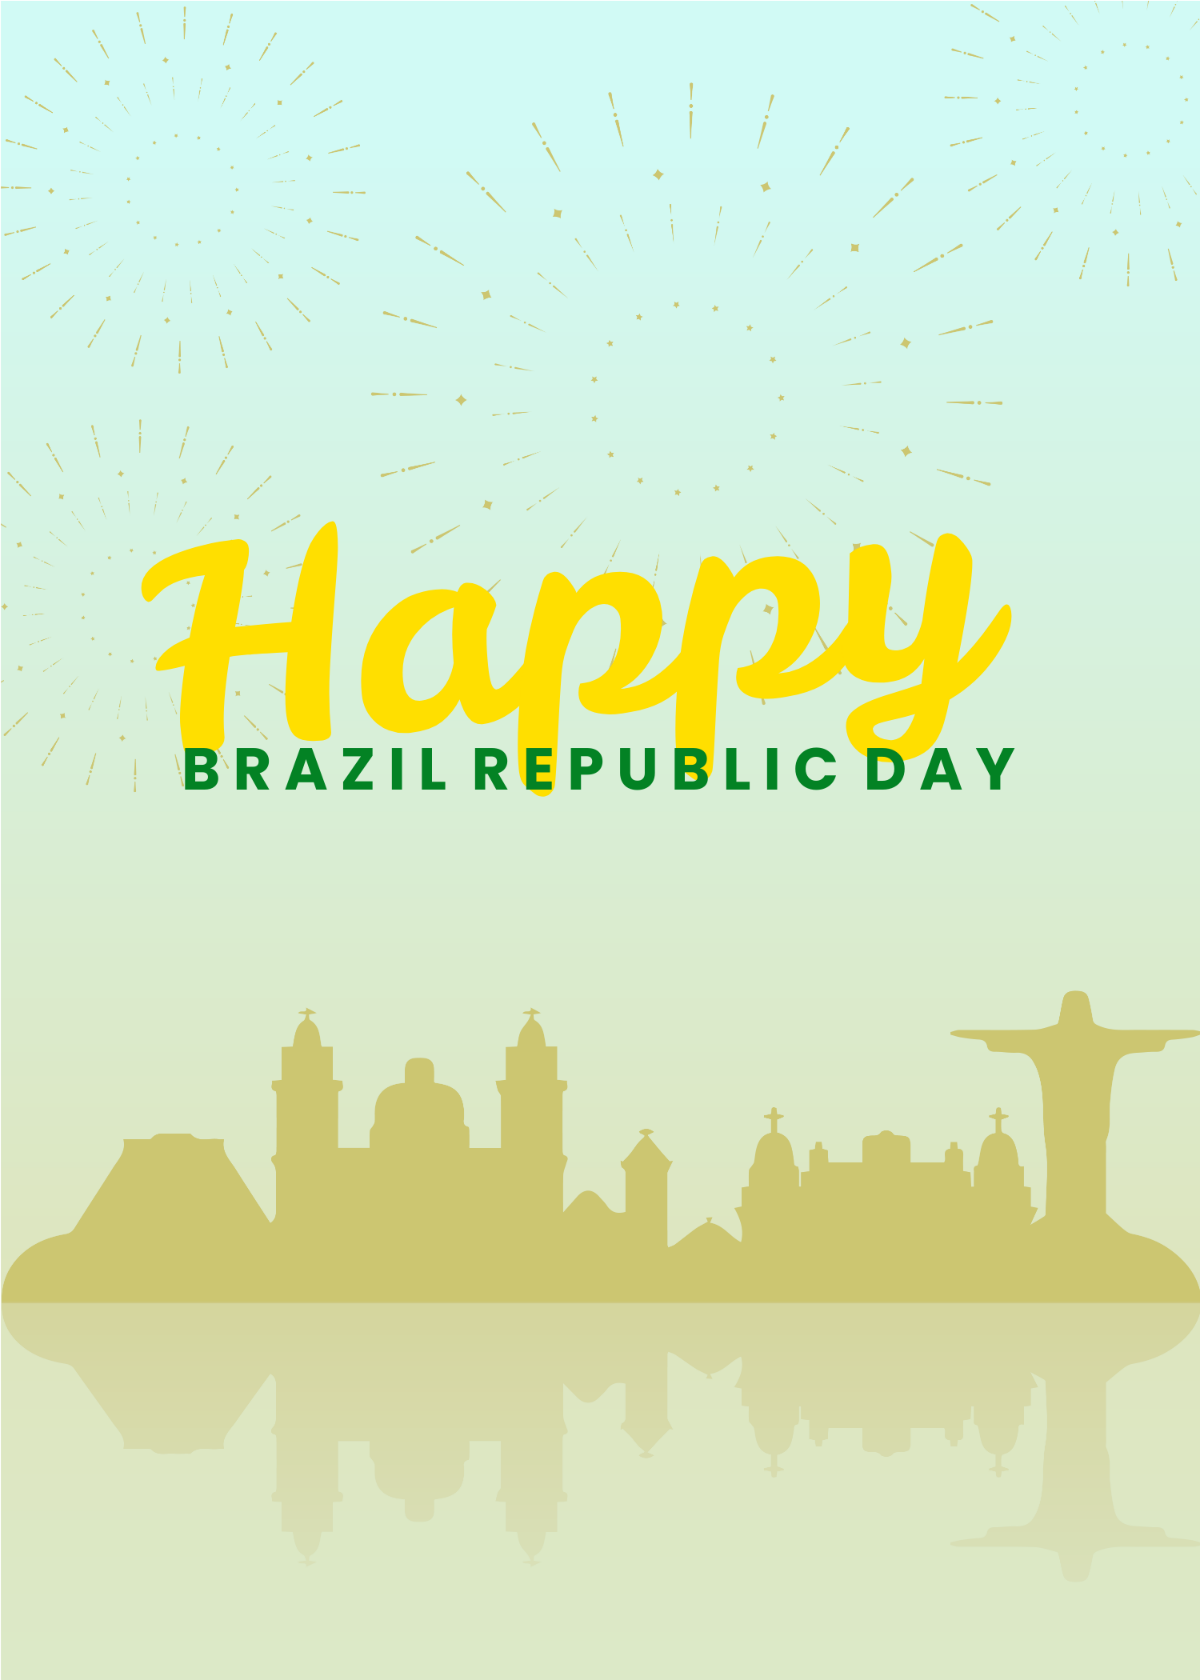 Brazil Republic Day Greeting Card